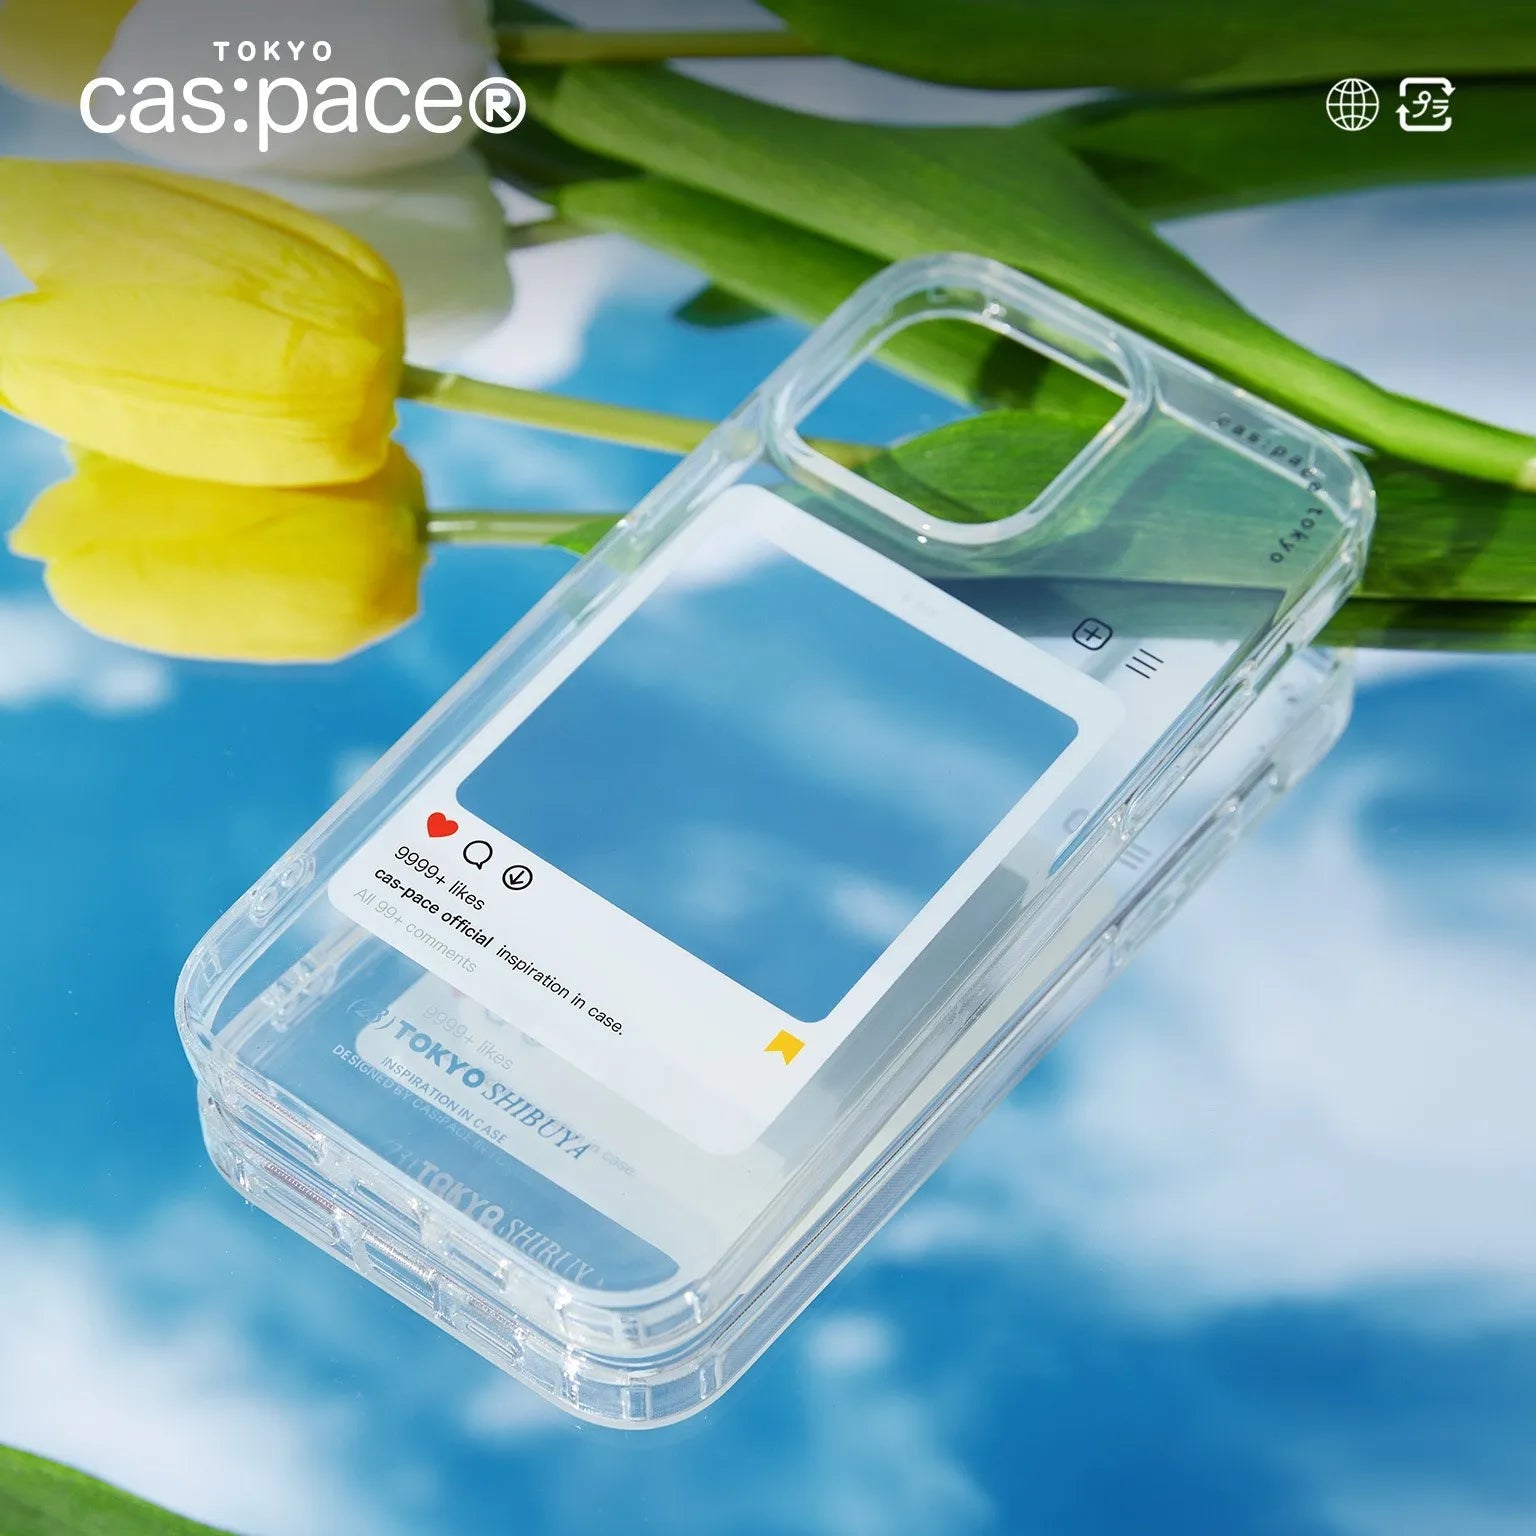 cas:pace 23S/S「ins mirror」携帯ケース - cas:pace 殼空間